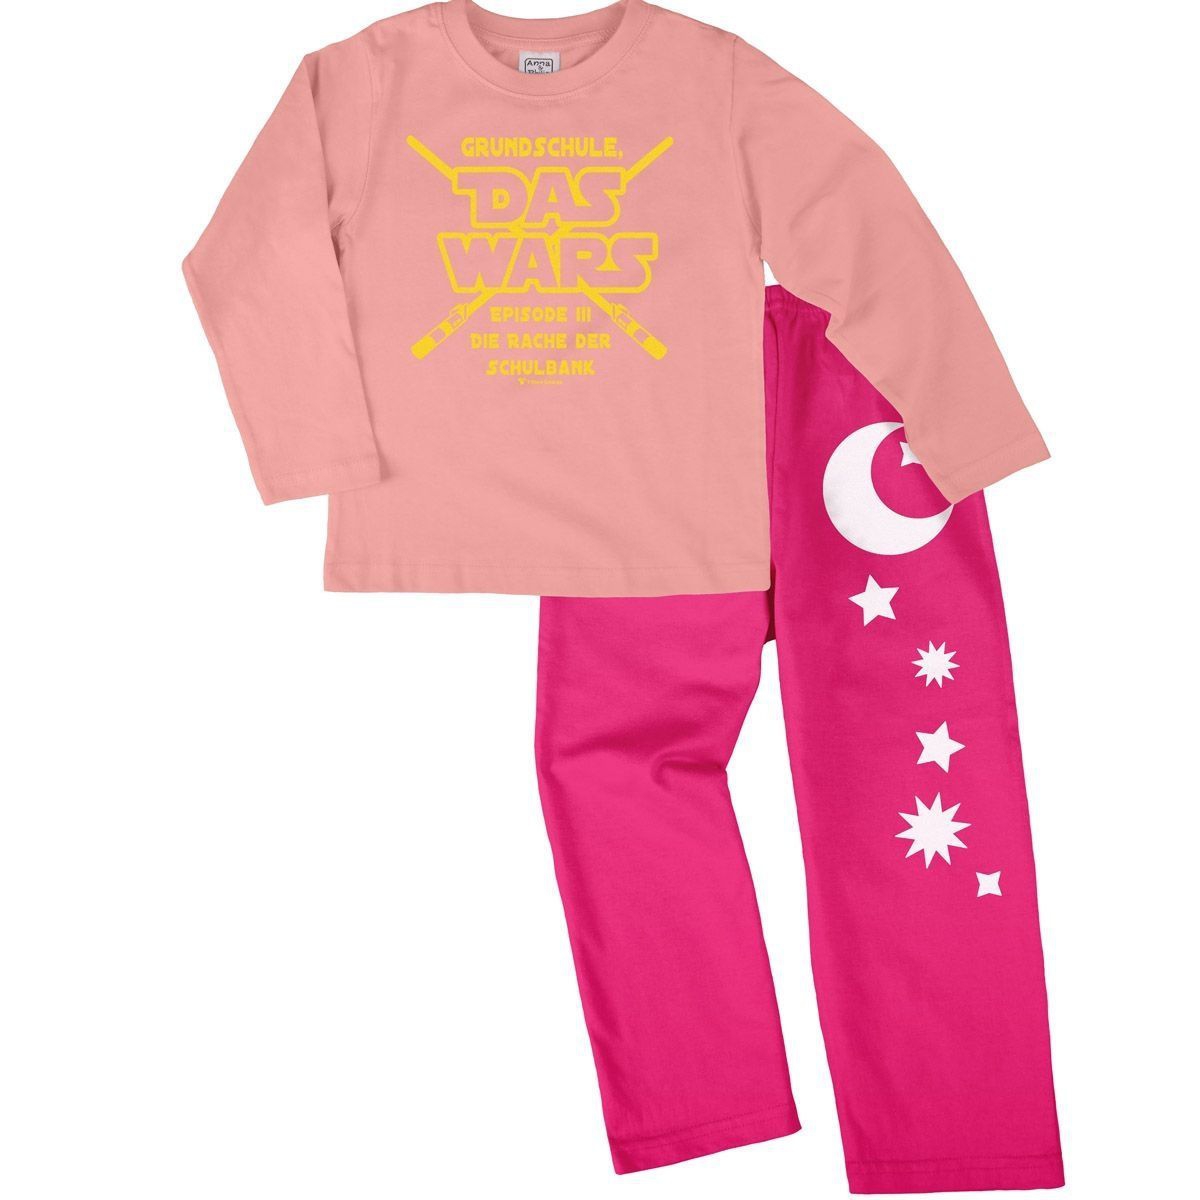 Das wars Grundschule Pyjama Set rosa / pink 134 / 140